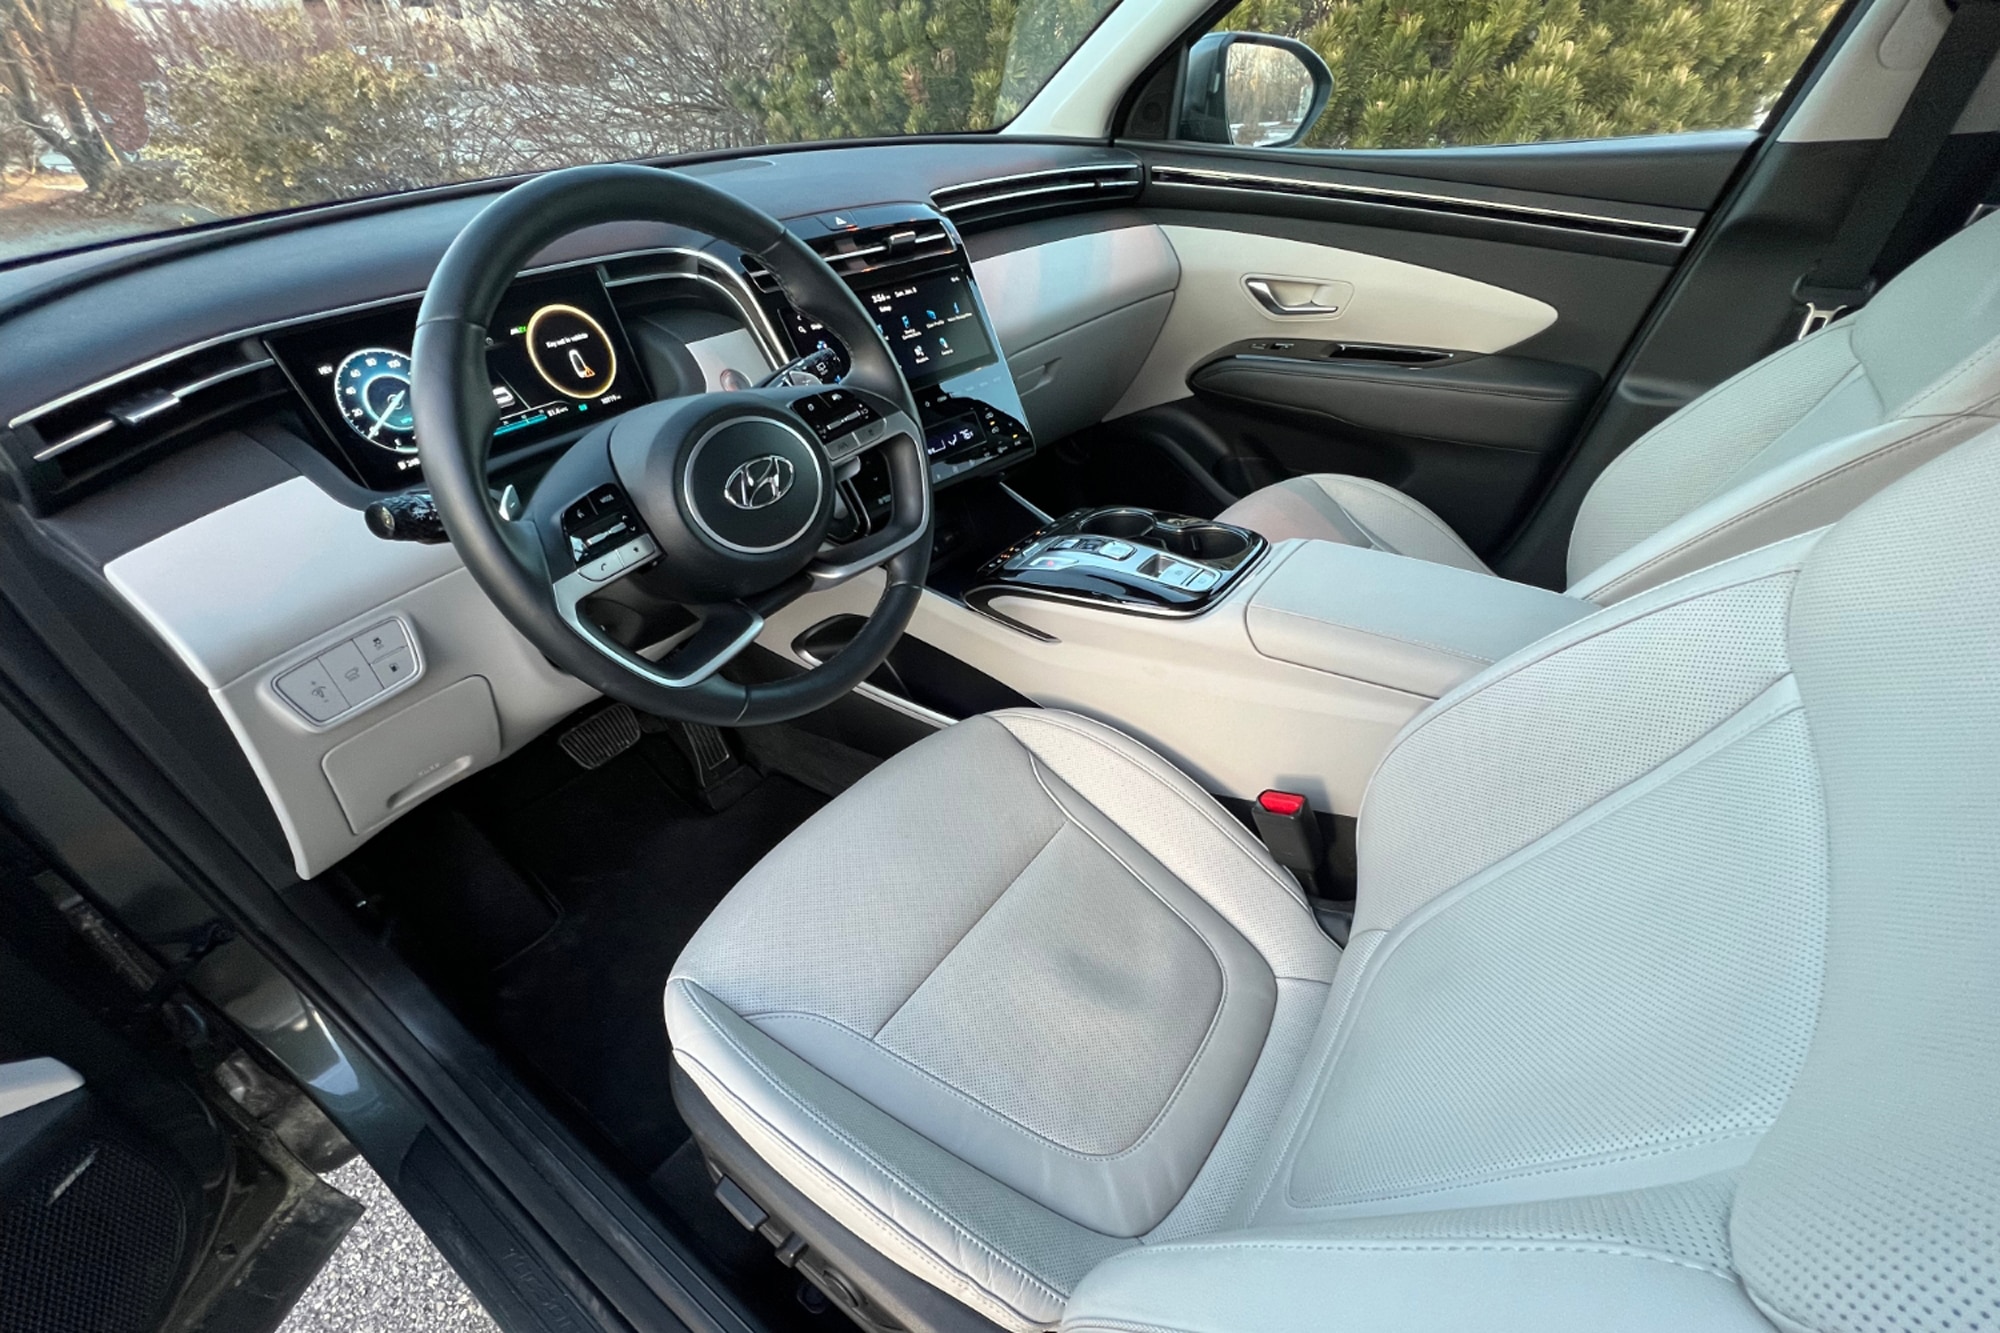 2023 Hyundai Tucson PHEV white interior dashboard and front seats